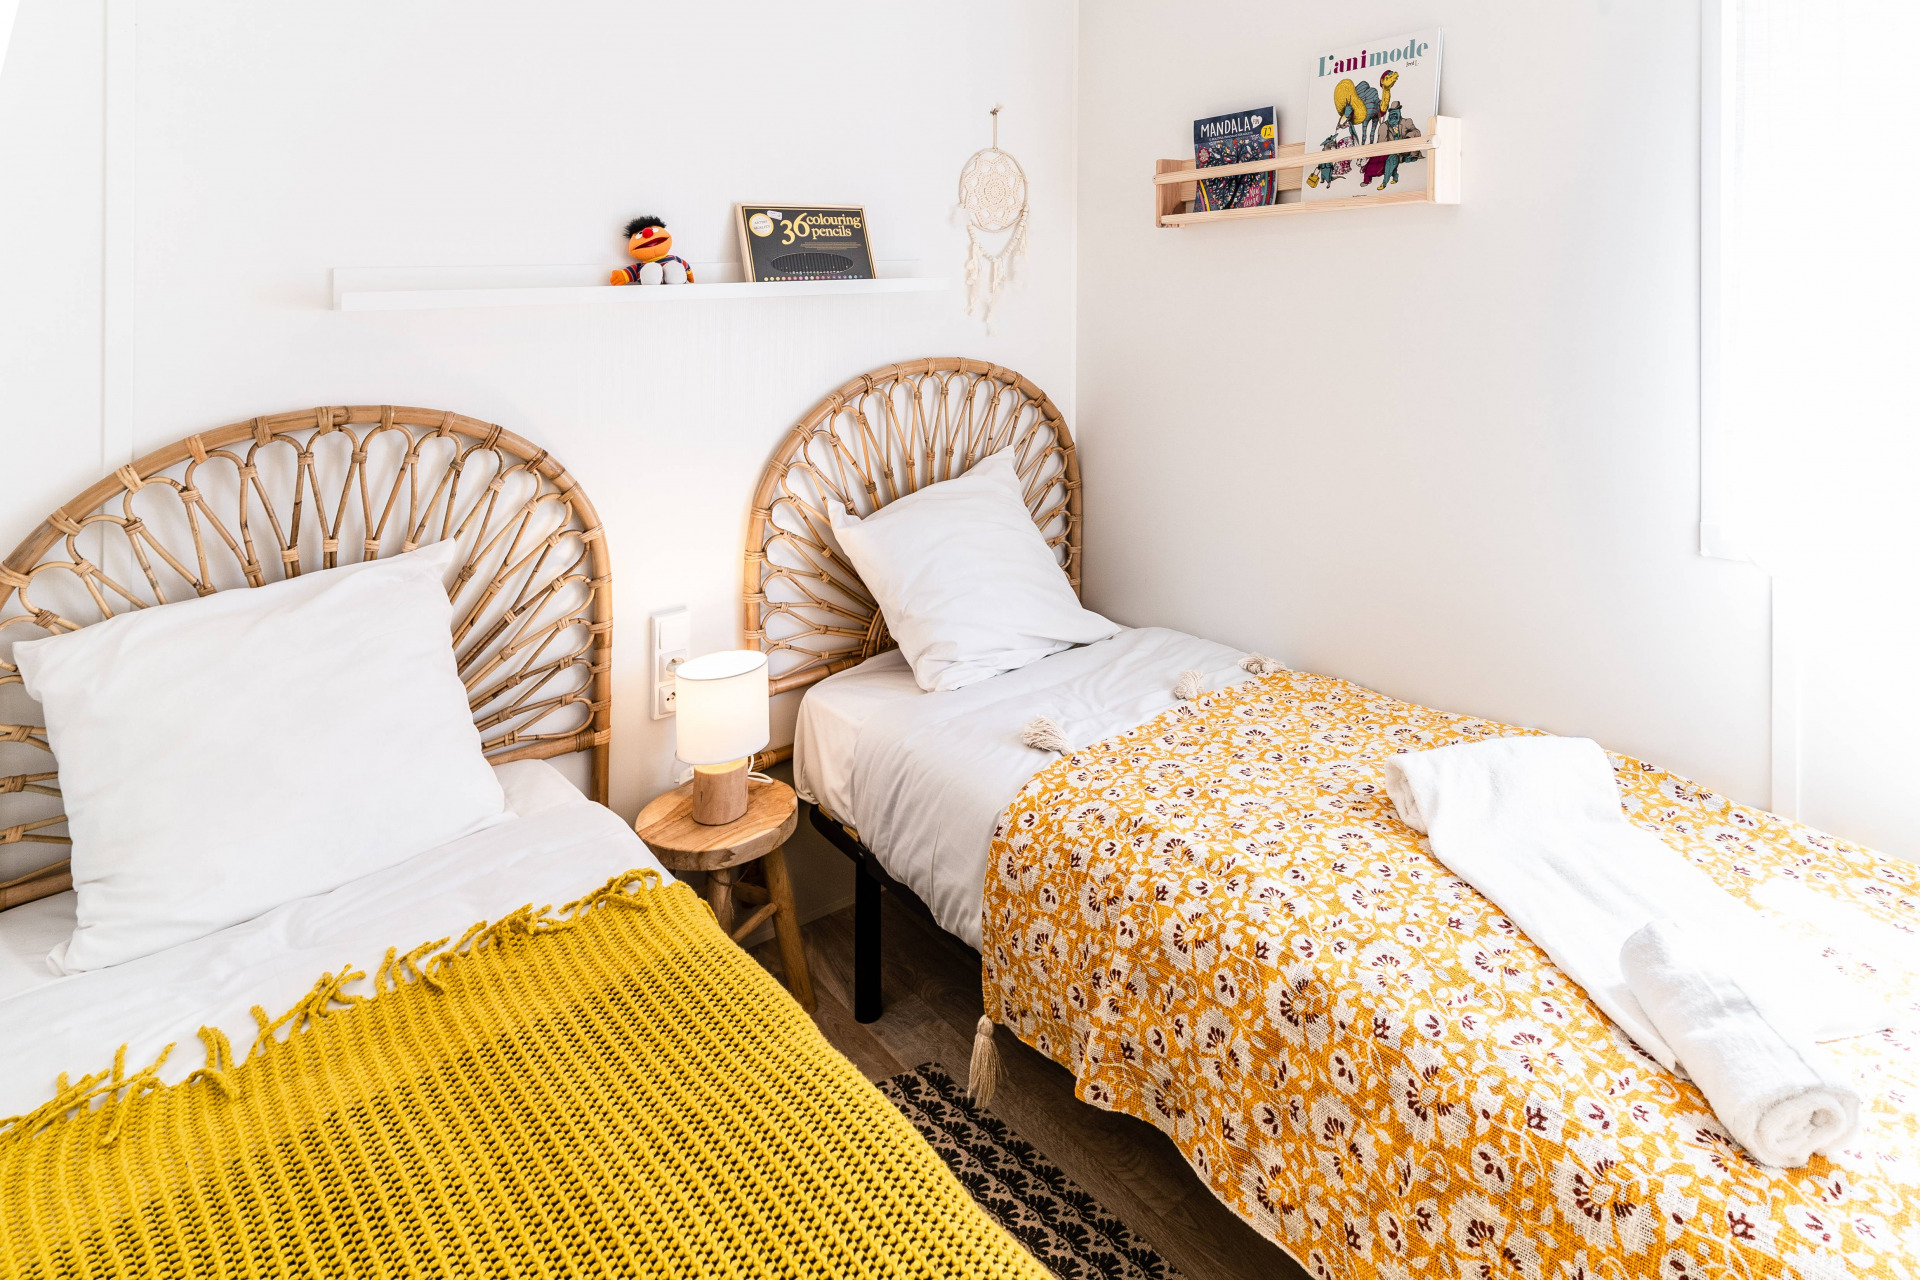 Camping Bellevue Premium: 3-bedroom mobile home, 40 m2, 2 bathrooms 1